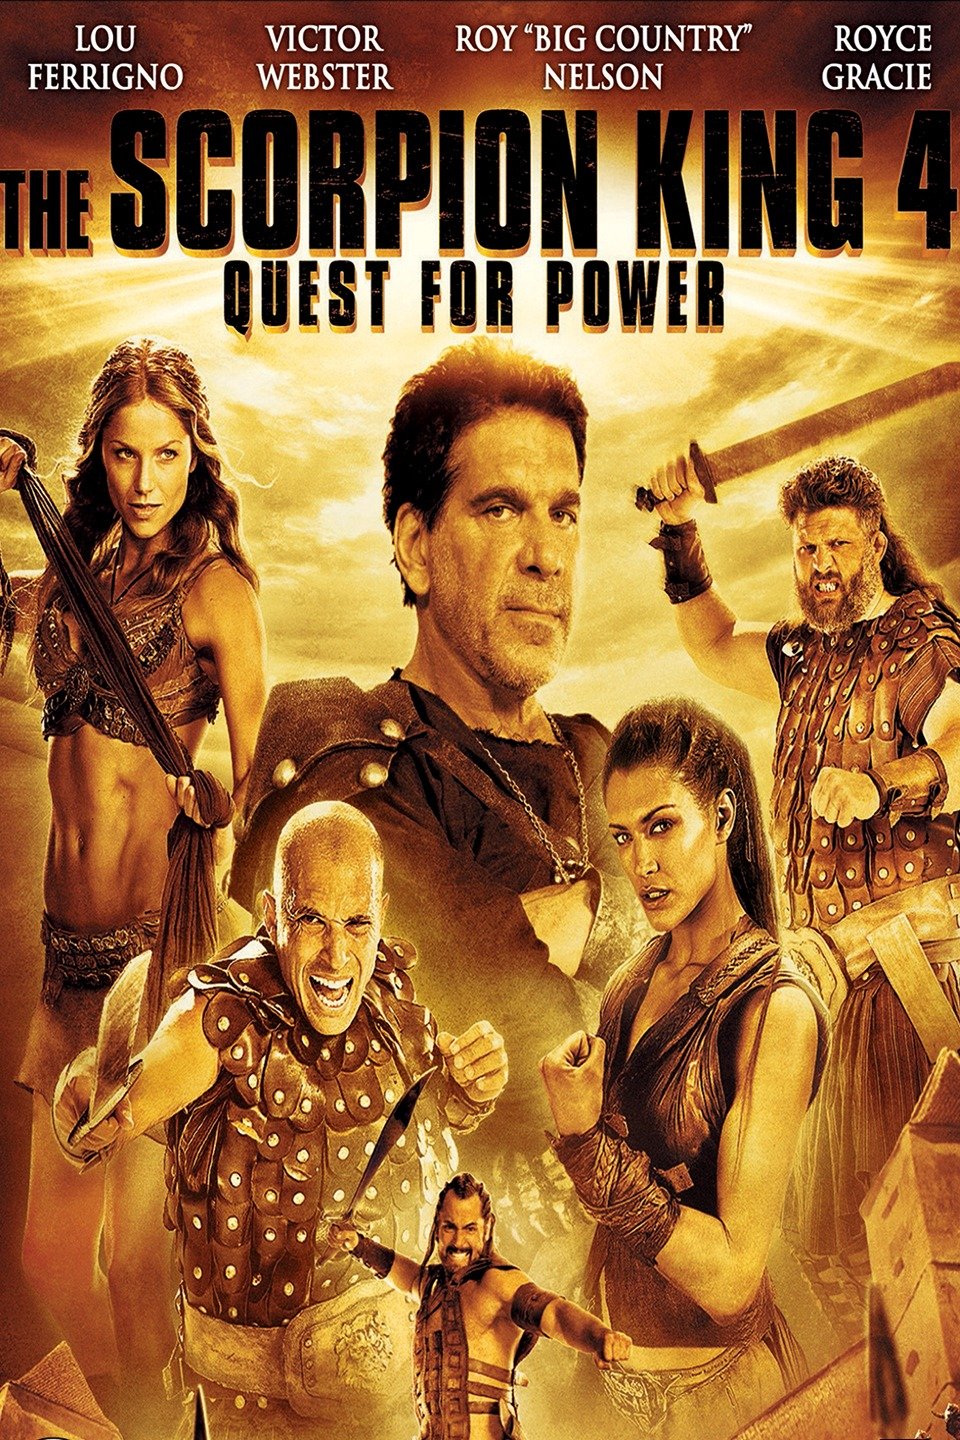 [MINI Super-HQ] The Scorpion King 4: Quest for Power (2015) ศึกชิงอำนาจจอมราชันย์ ภาค 4 [1080p] [พากย์ไทย 5.1 + เสียงอังกฤษ DTS] [บรรยายไทย + อังกฤษ] [เสียงไทย + ซับไทย] [OPENLOAD]